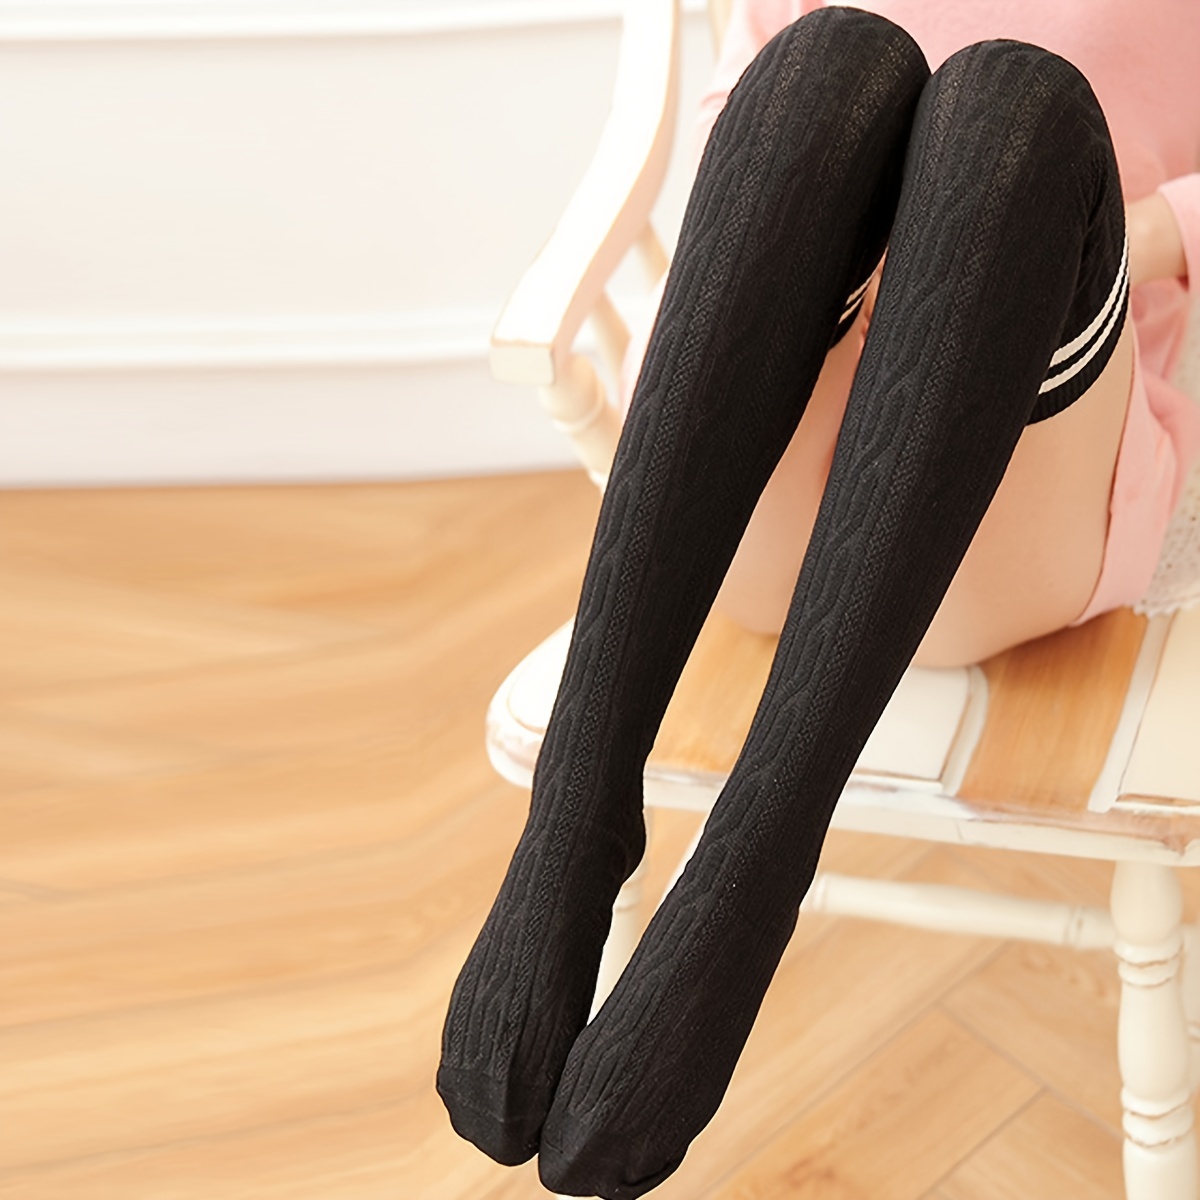 Kawaii Lace Thigh High Socks, Transparent Over The Knee Socks, Women's  Stockings & Hosiery